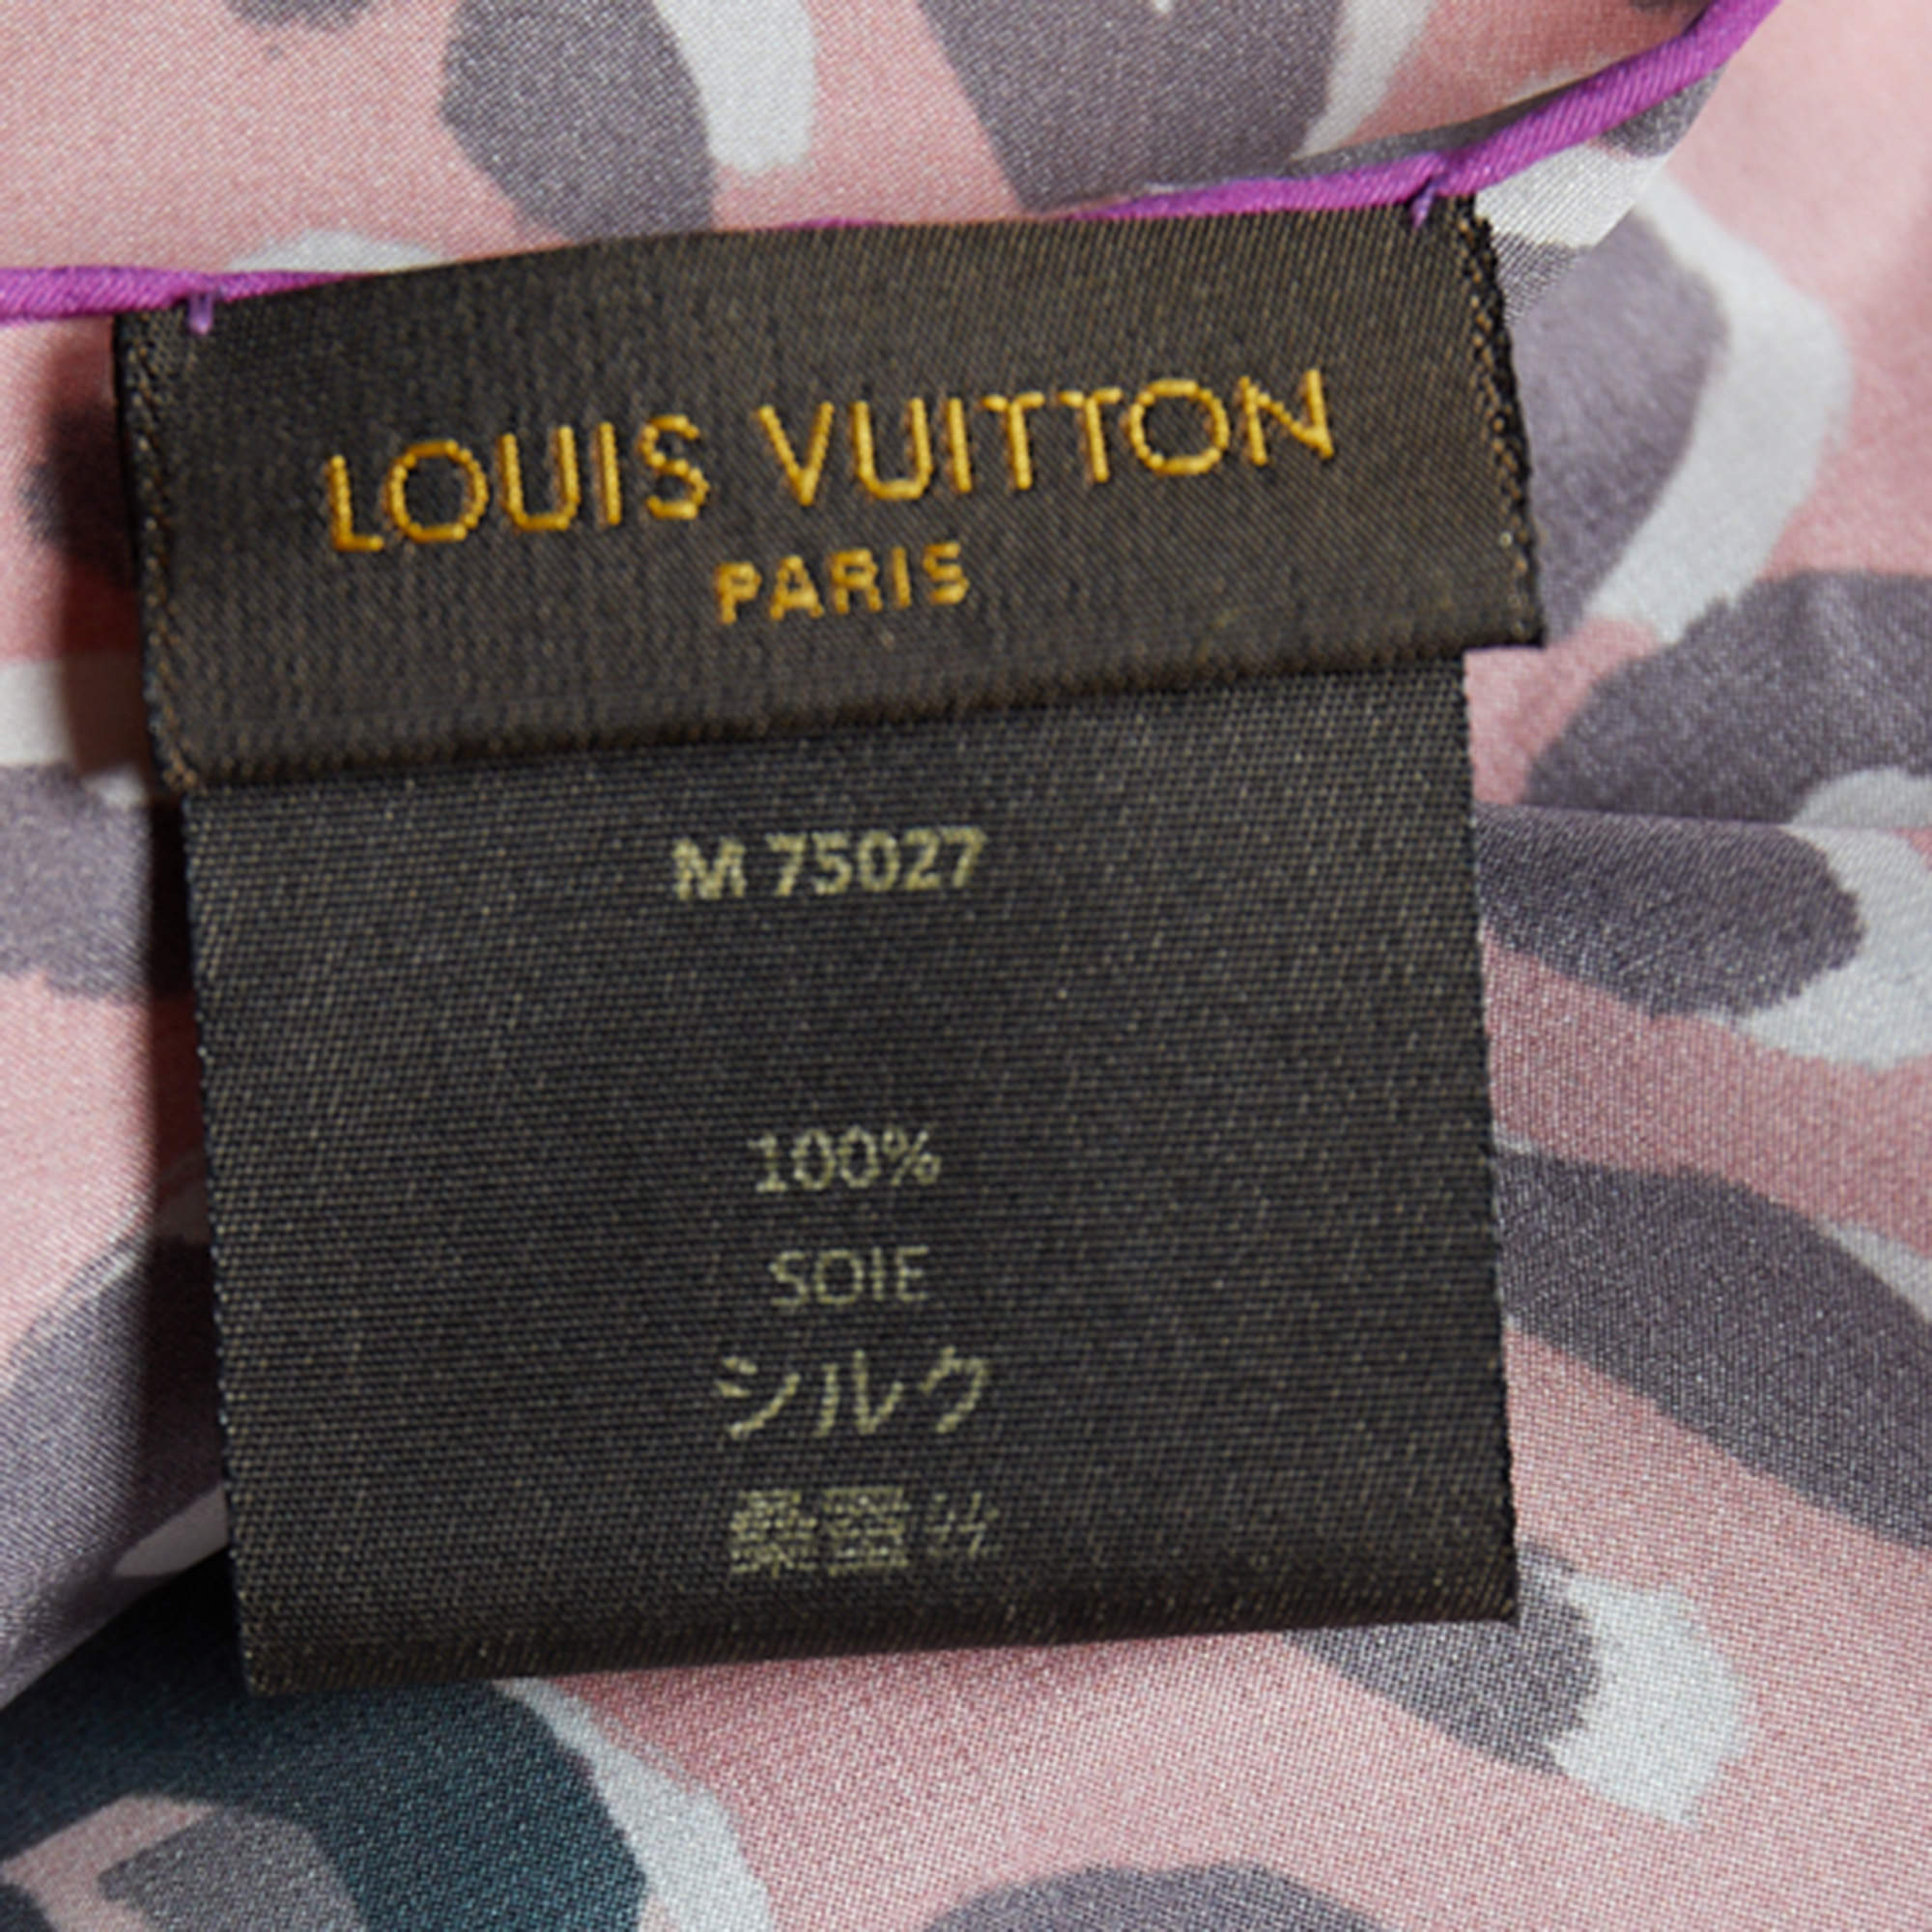 Louis Vuitton Scarf Snood Leopard Navy x Red Multicolor 100% Silk